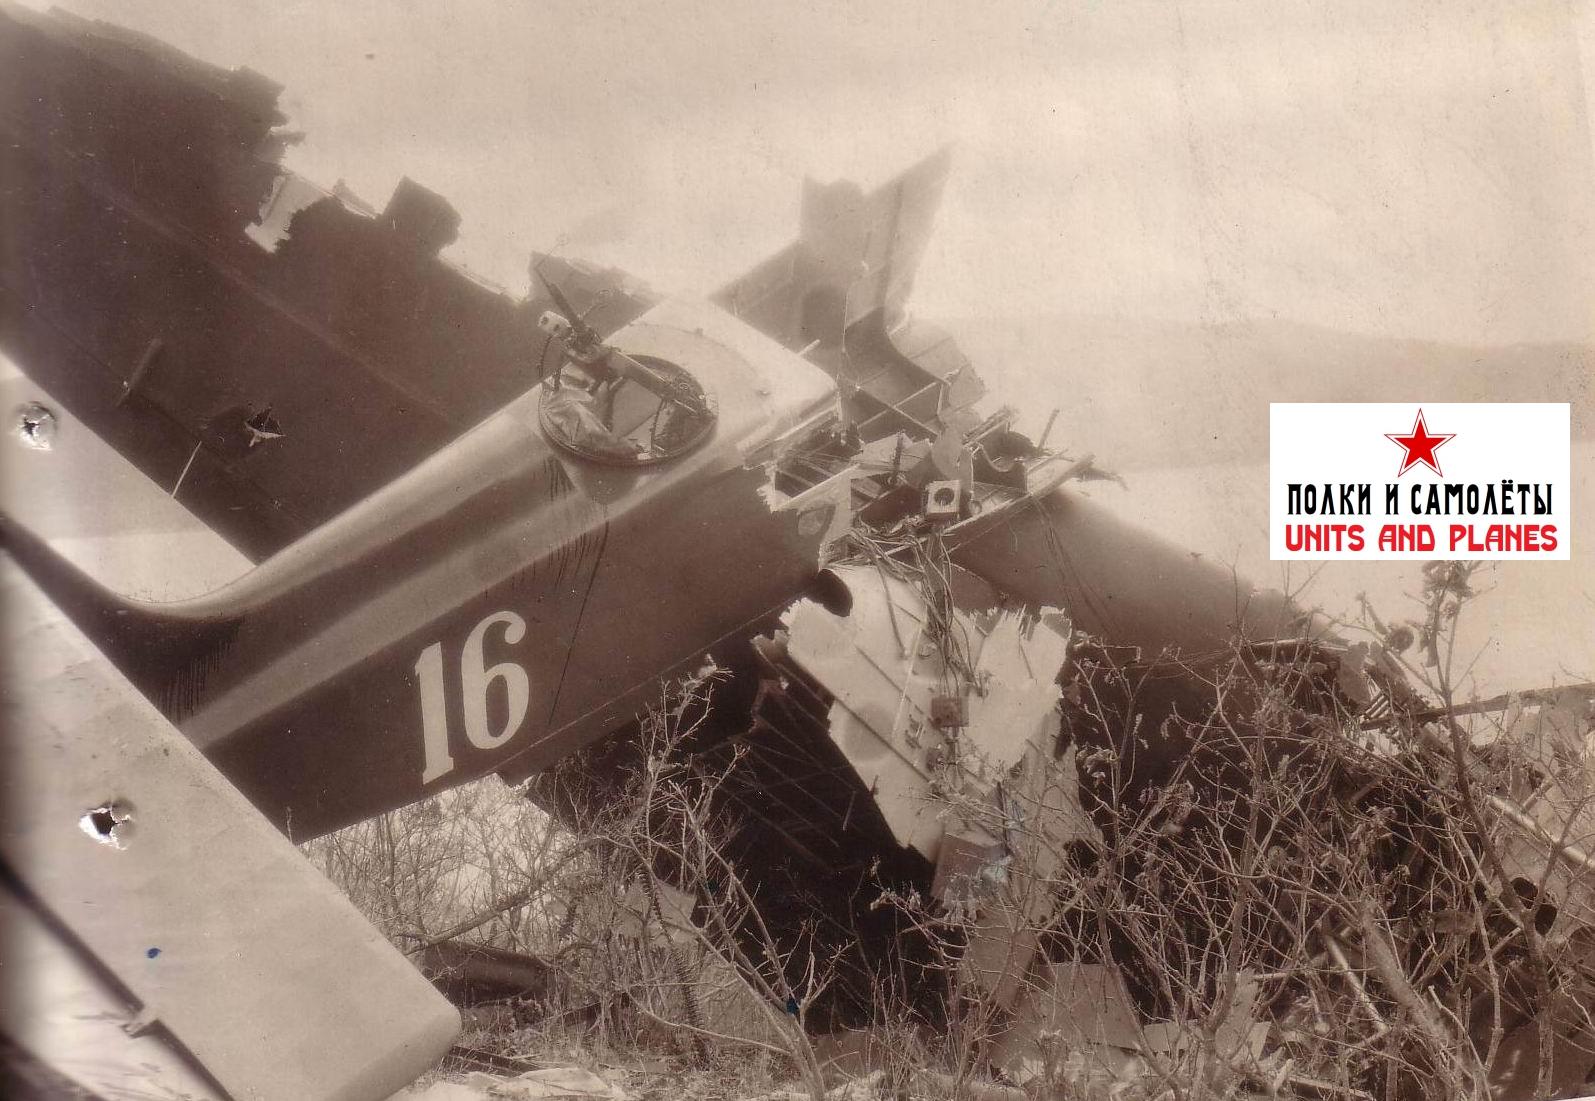 Поломка амбар Авария МБР-2 47 ОМБРАЭ, лётчик Арутюнов А. А. в районе б. Врангель.